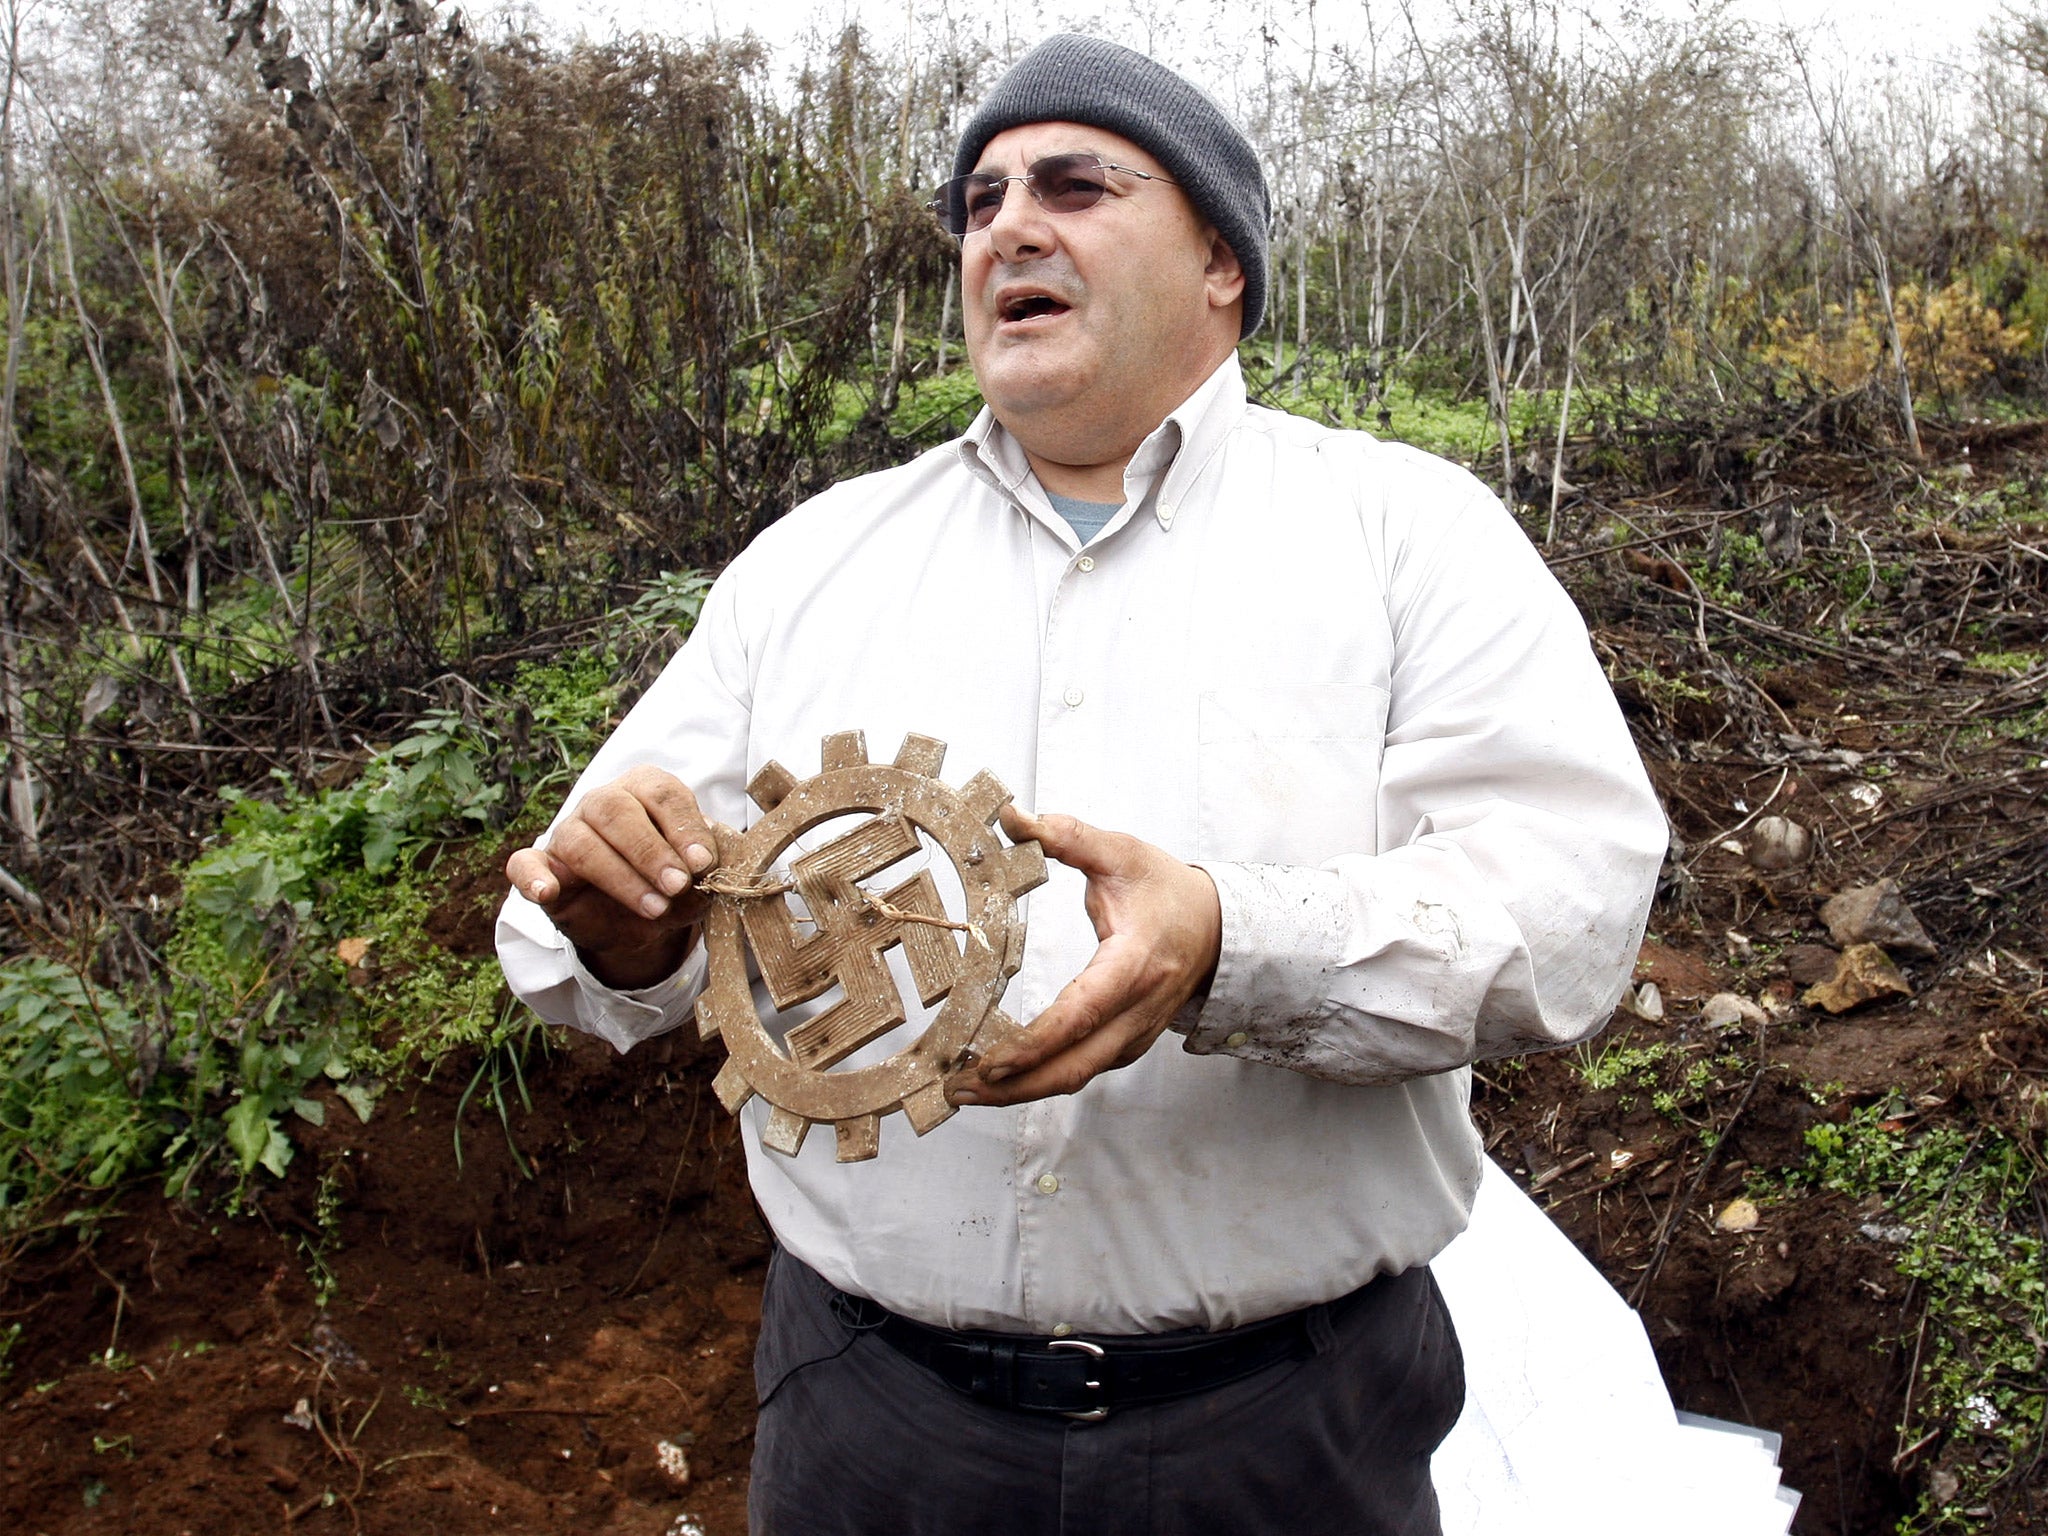 Israeli investigative journalist and gold hunter Yaron Svoray